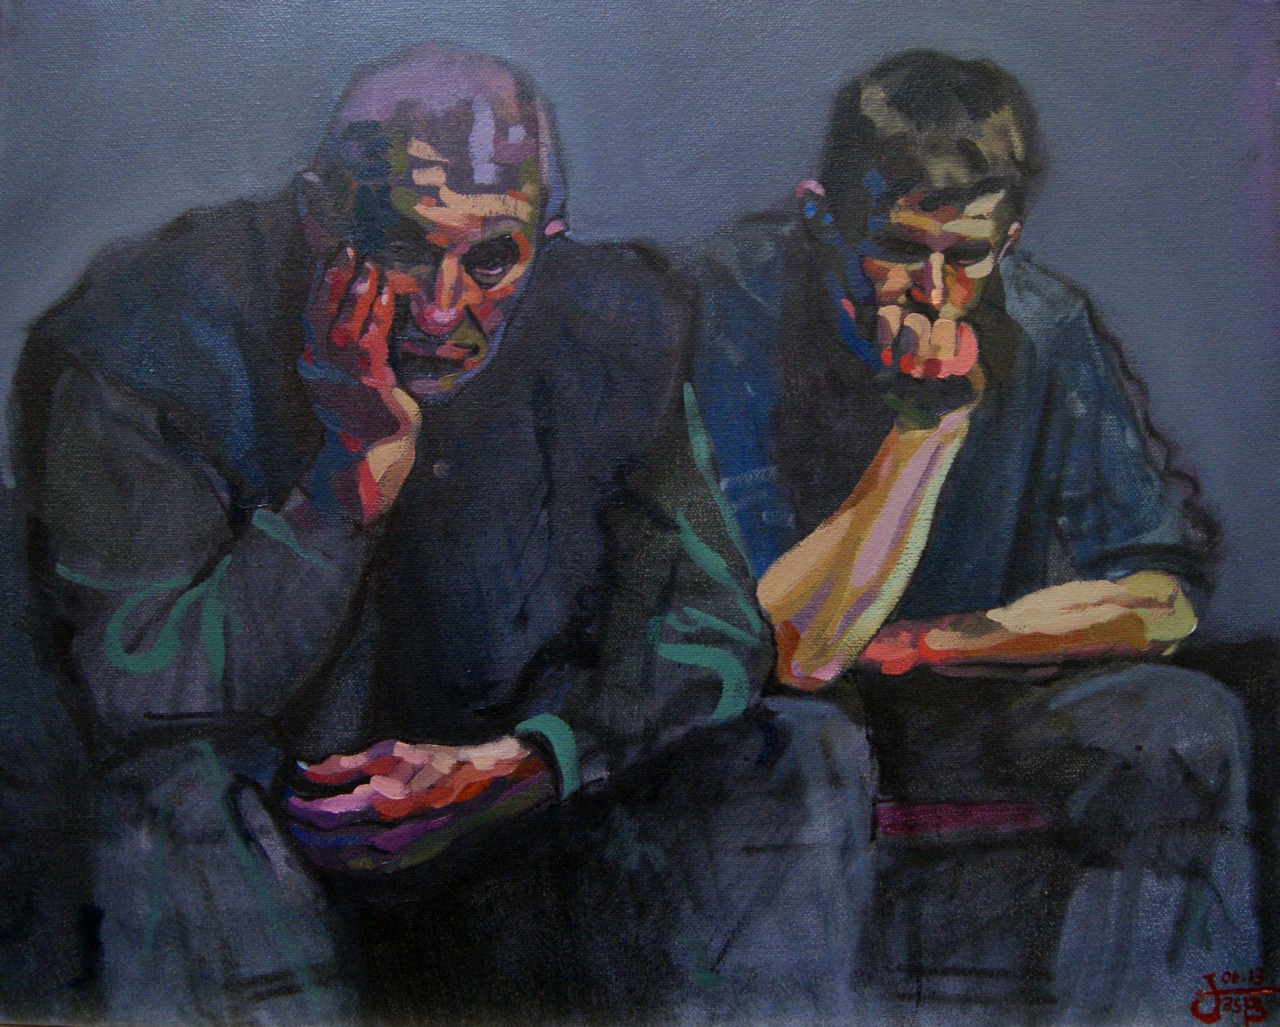 ‘A Fair Deal’, Oil on canvas. 40X50cm.
One of the Auction mart series.
http://jackbsbanister.tumblr.com/